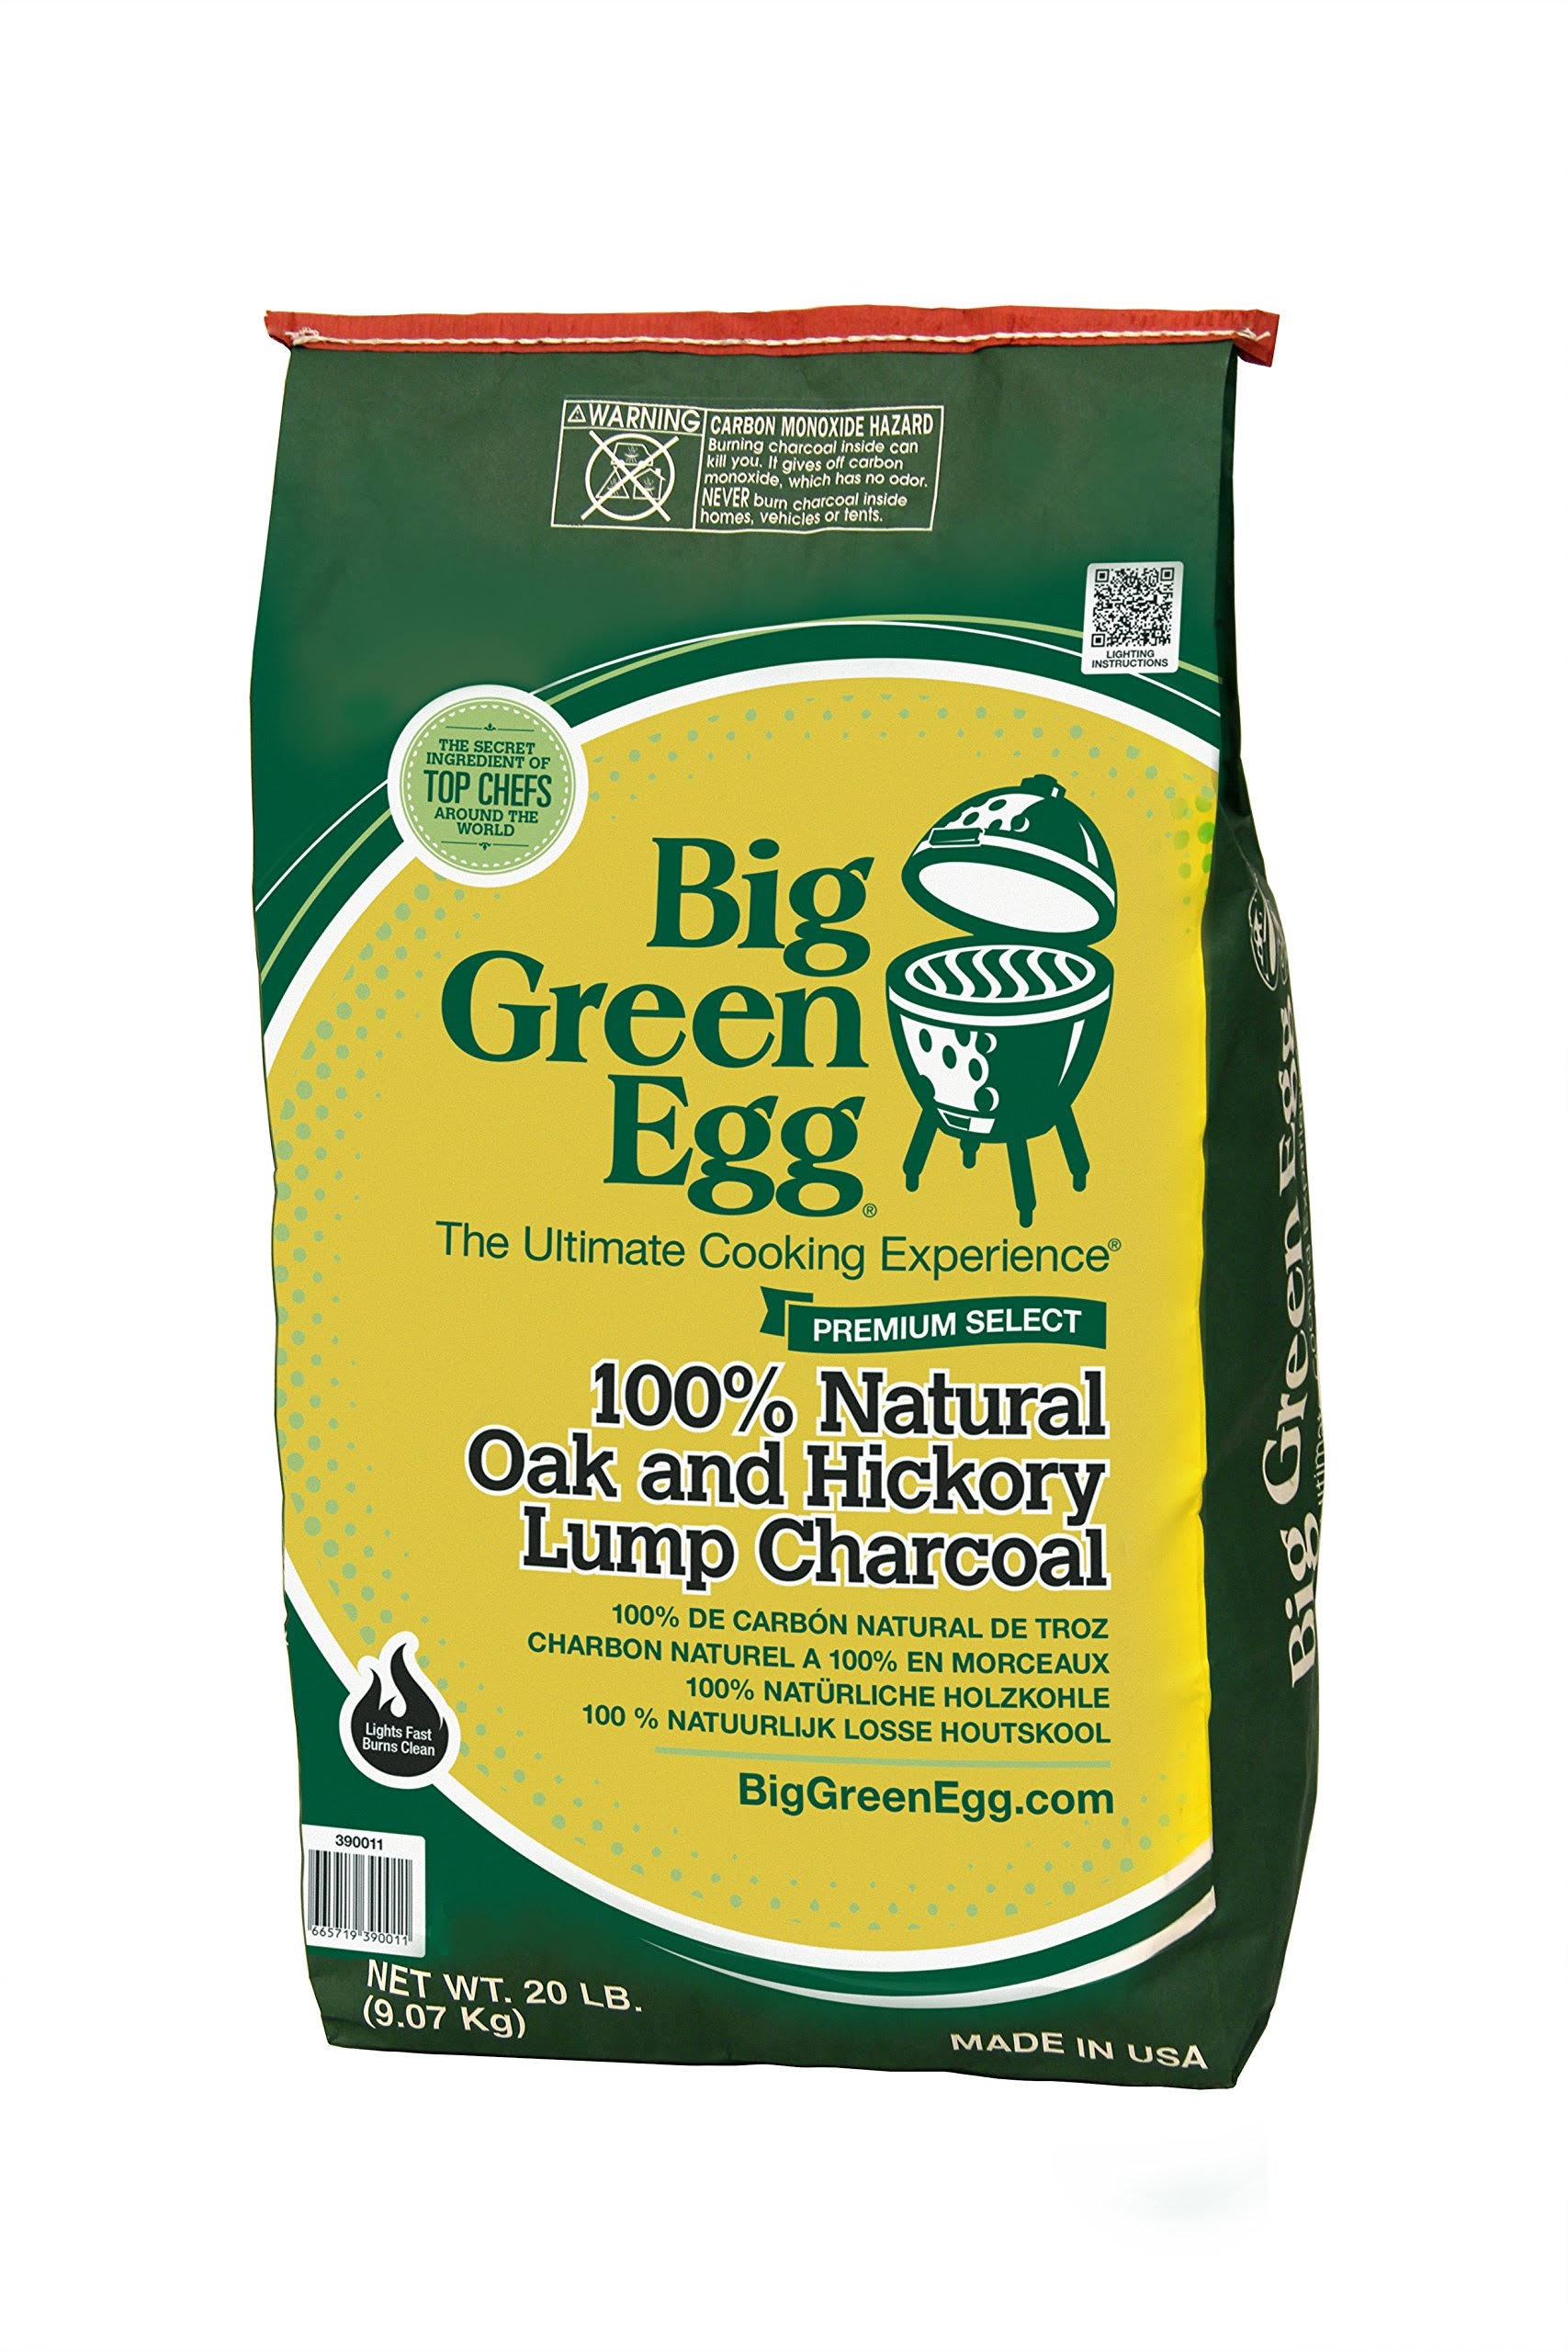 Big Green Egg 100% Organic Lump Charcoal - 20lbs